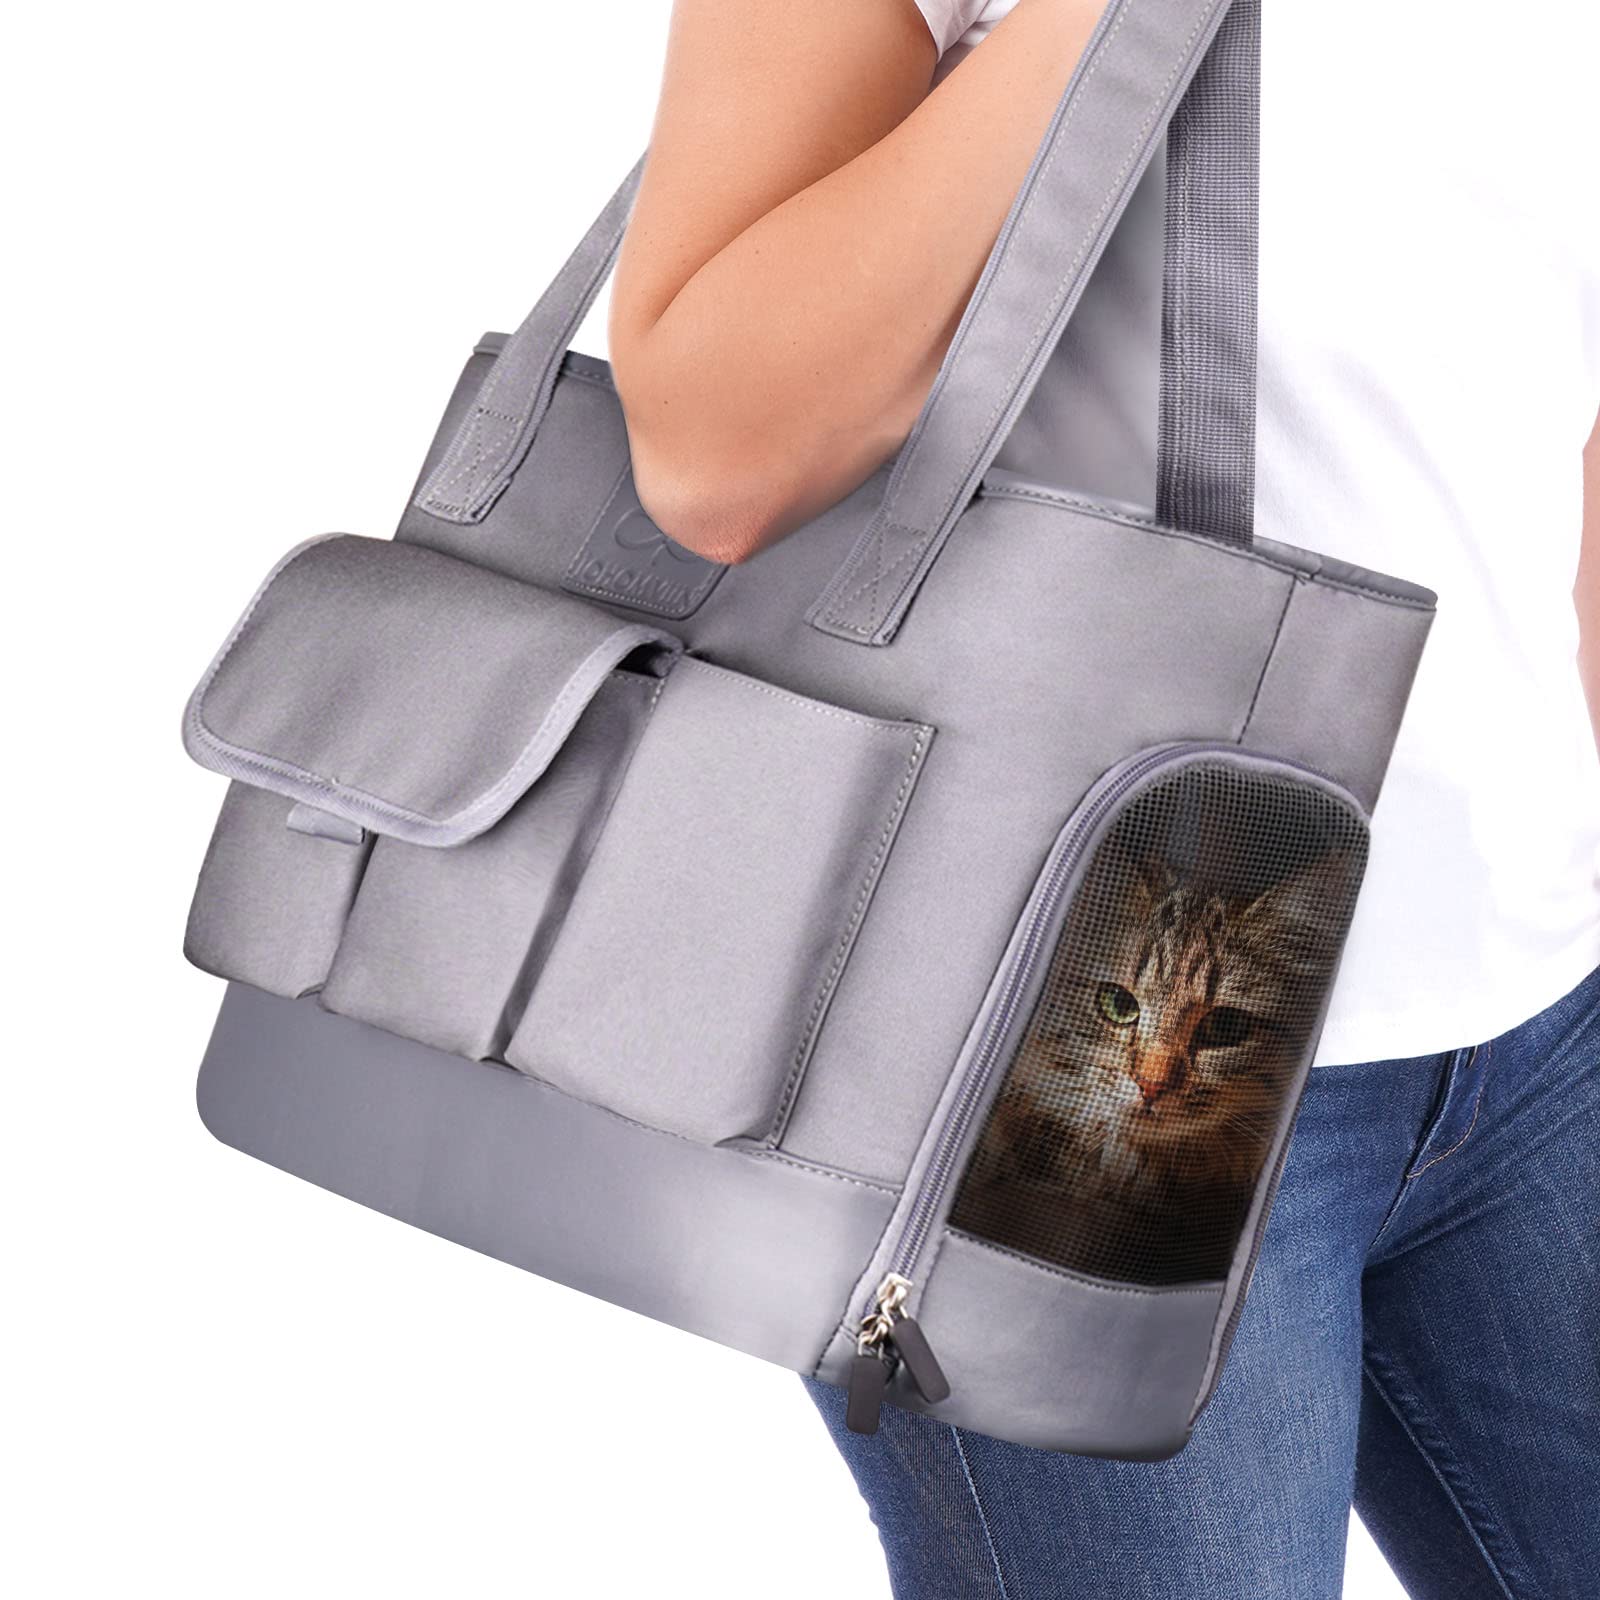 Johomviin Dog carrier, cat carrier, Pet carrier, Foldable Waterproof Premium Oxford cloth Dog Purse, Portable Bag carrier for Sm